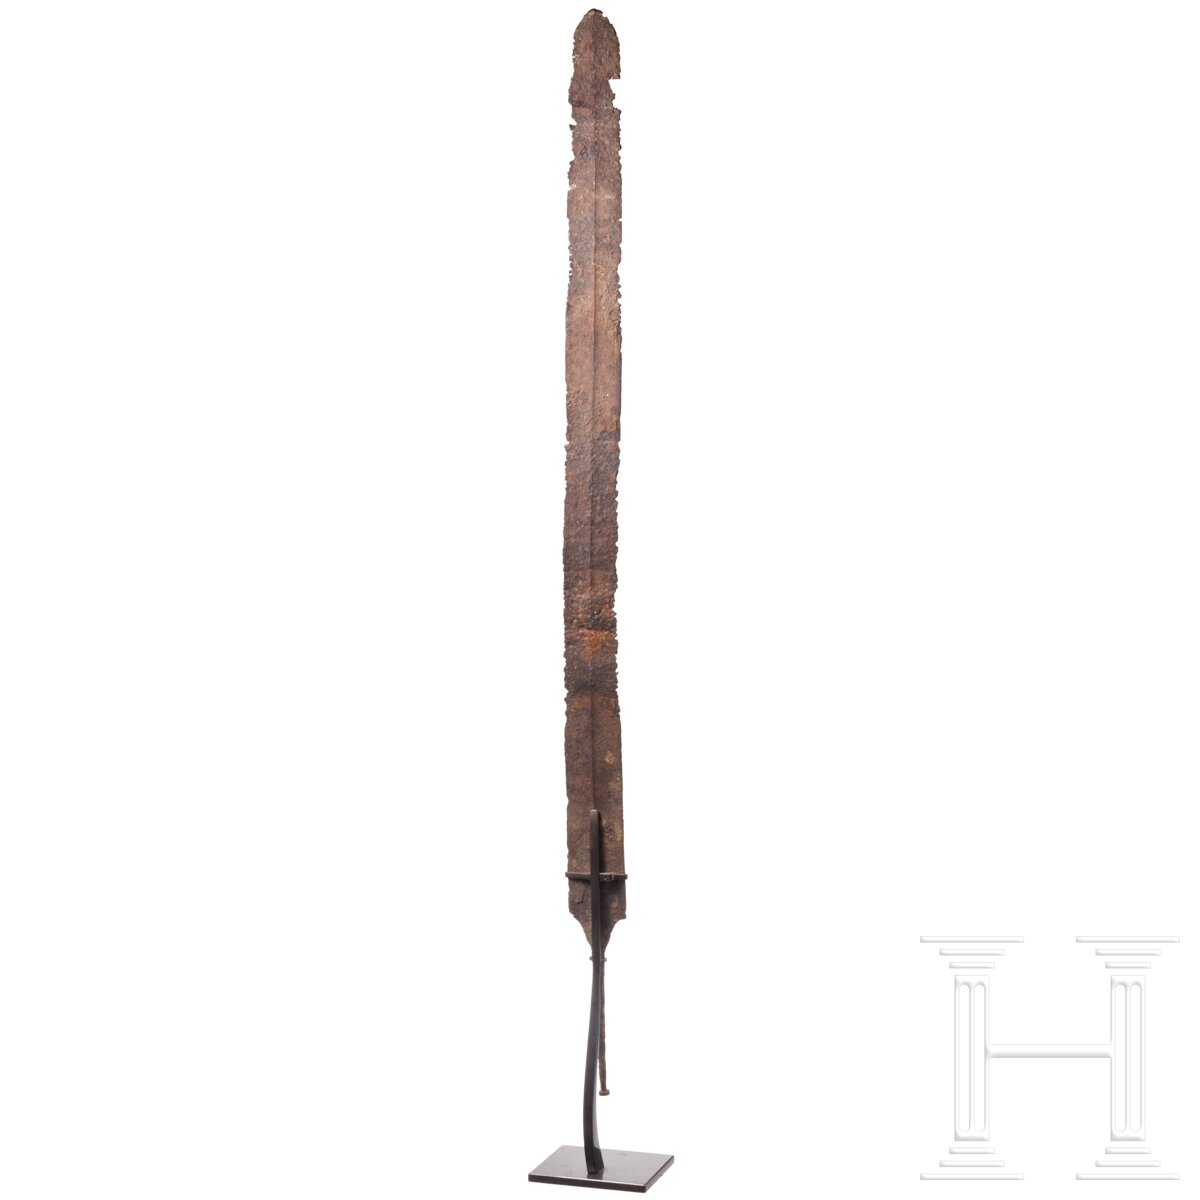 Großes eisernes Latène-Schwert, keltisch, 1. Jhdt. v. Chr. - 1. Jhdt. n. Chr. - Bild 2 aus 5